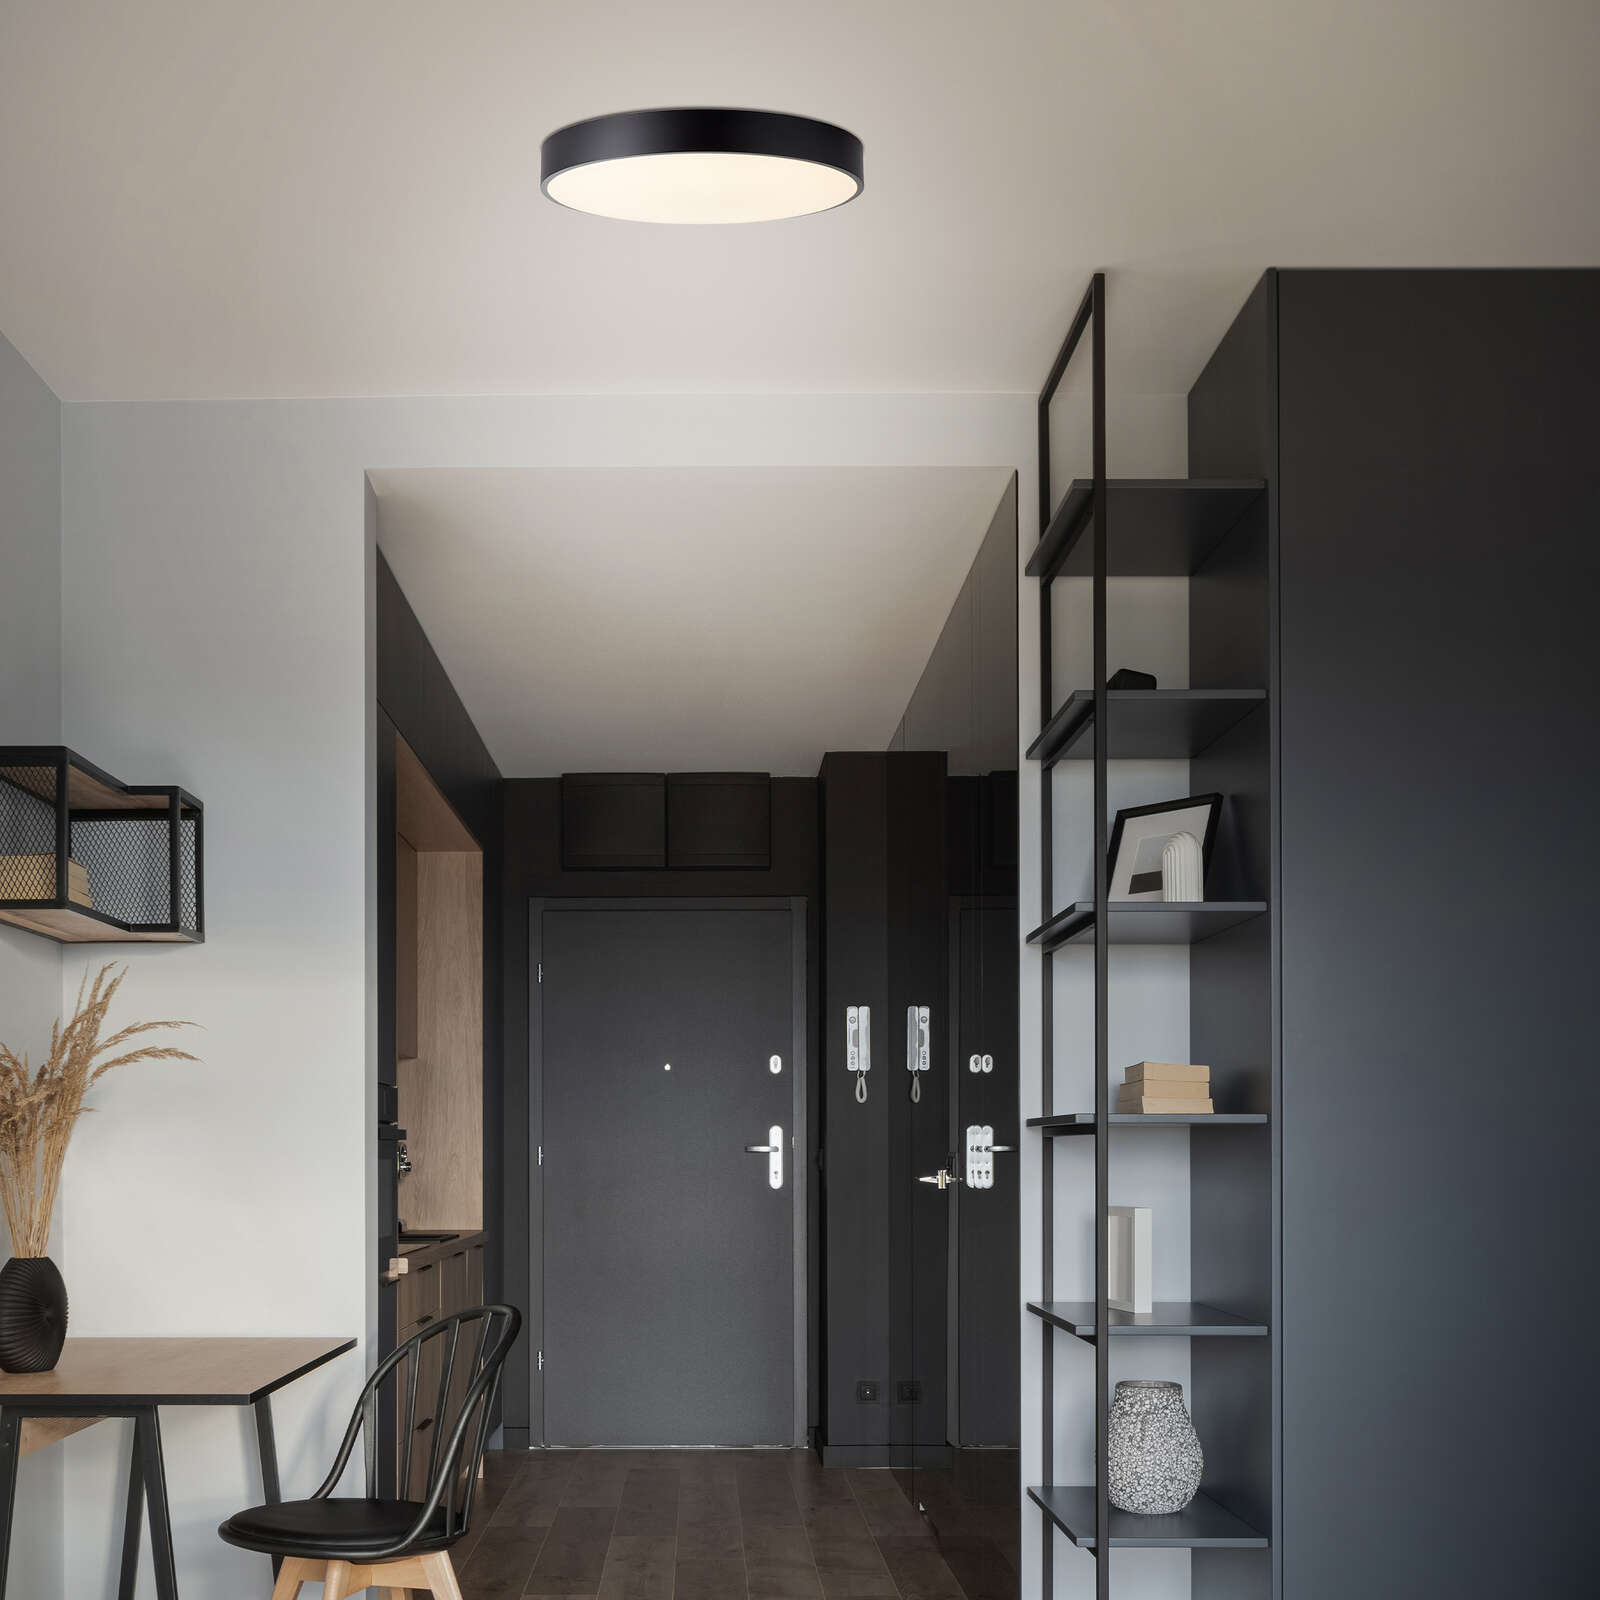             Metal wall and ceiling light - Niklas 3 - Black
        